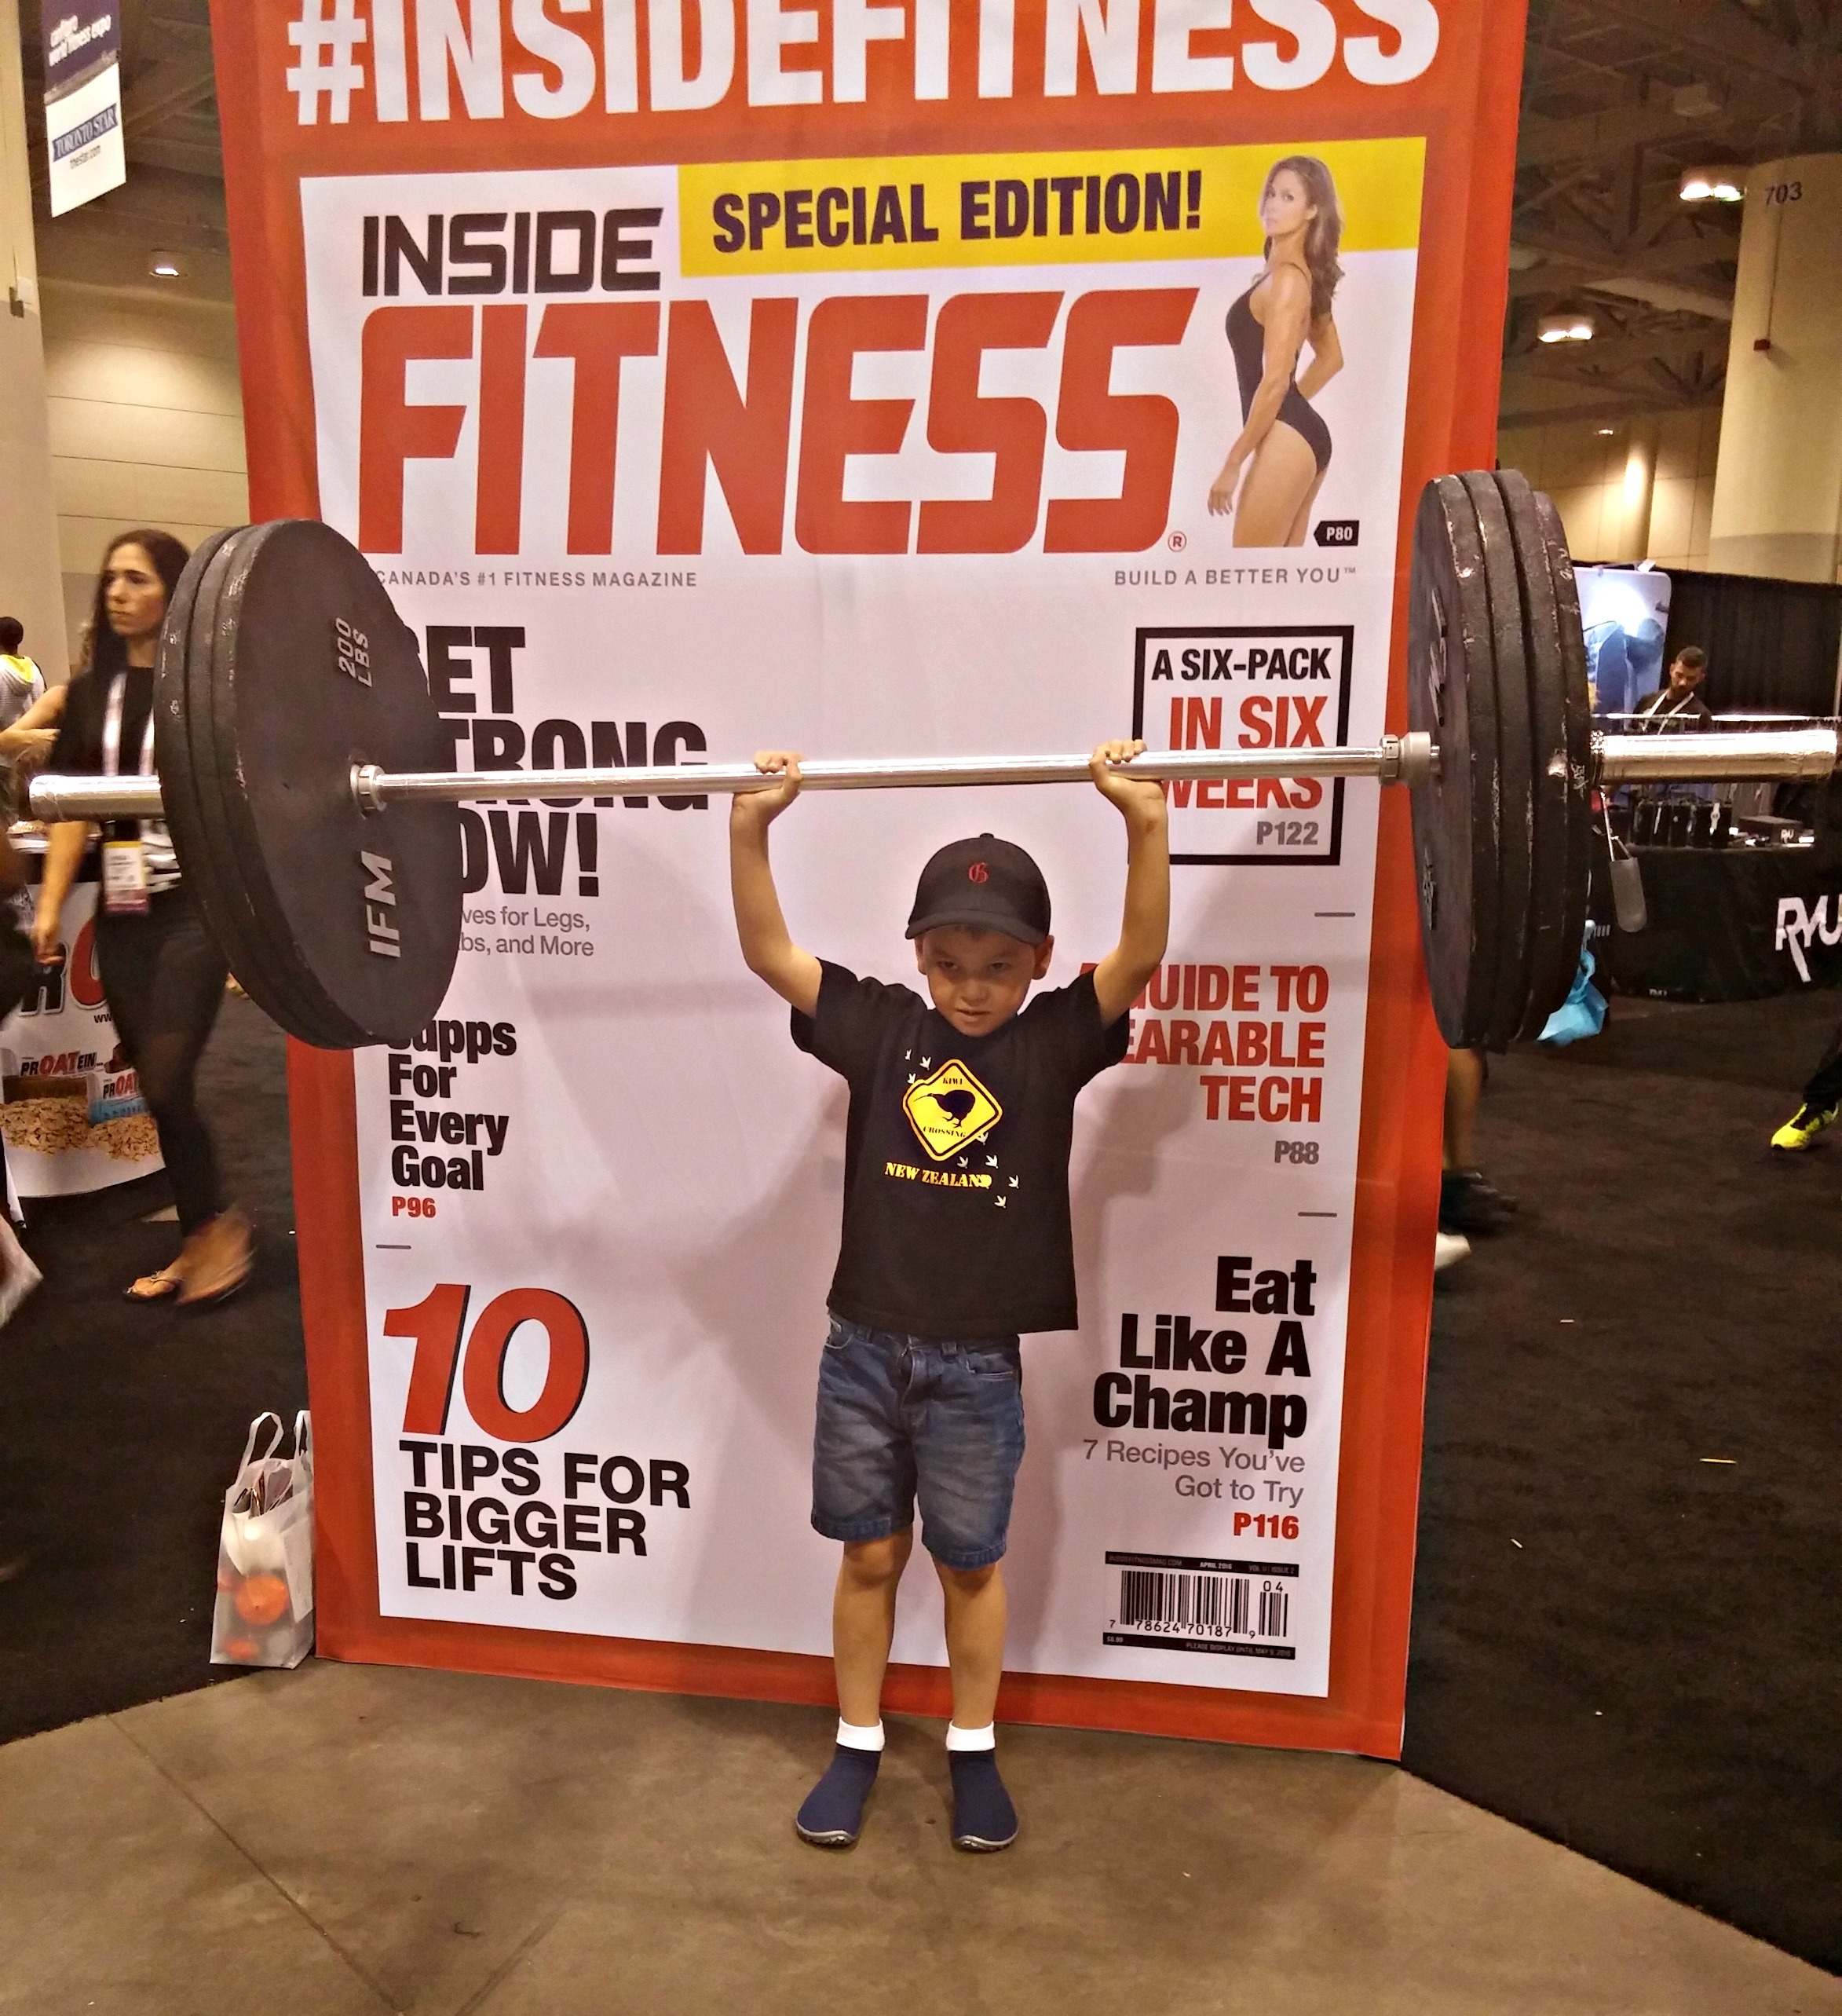 Cute kid posing at Inside Fitness set up